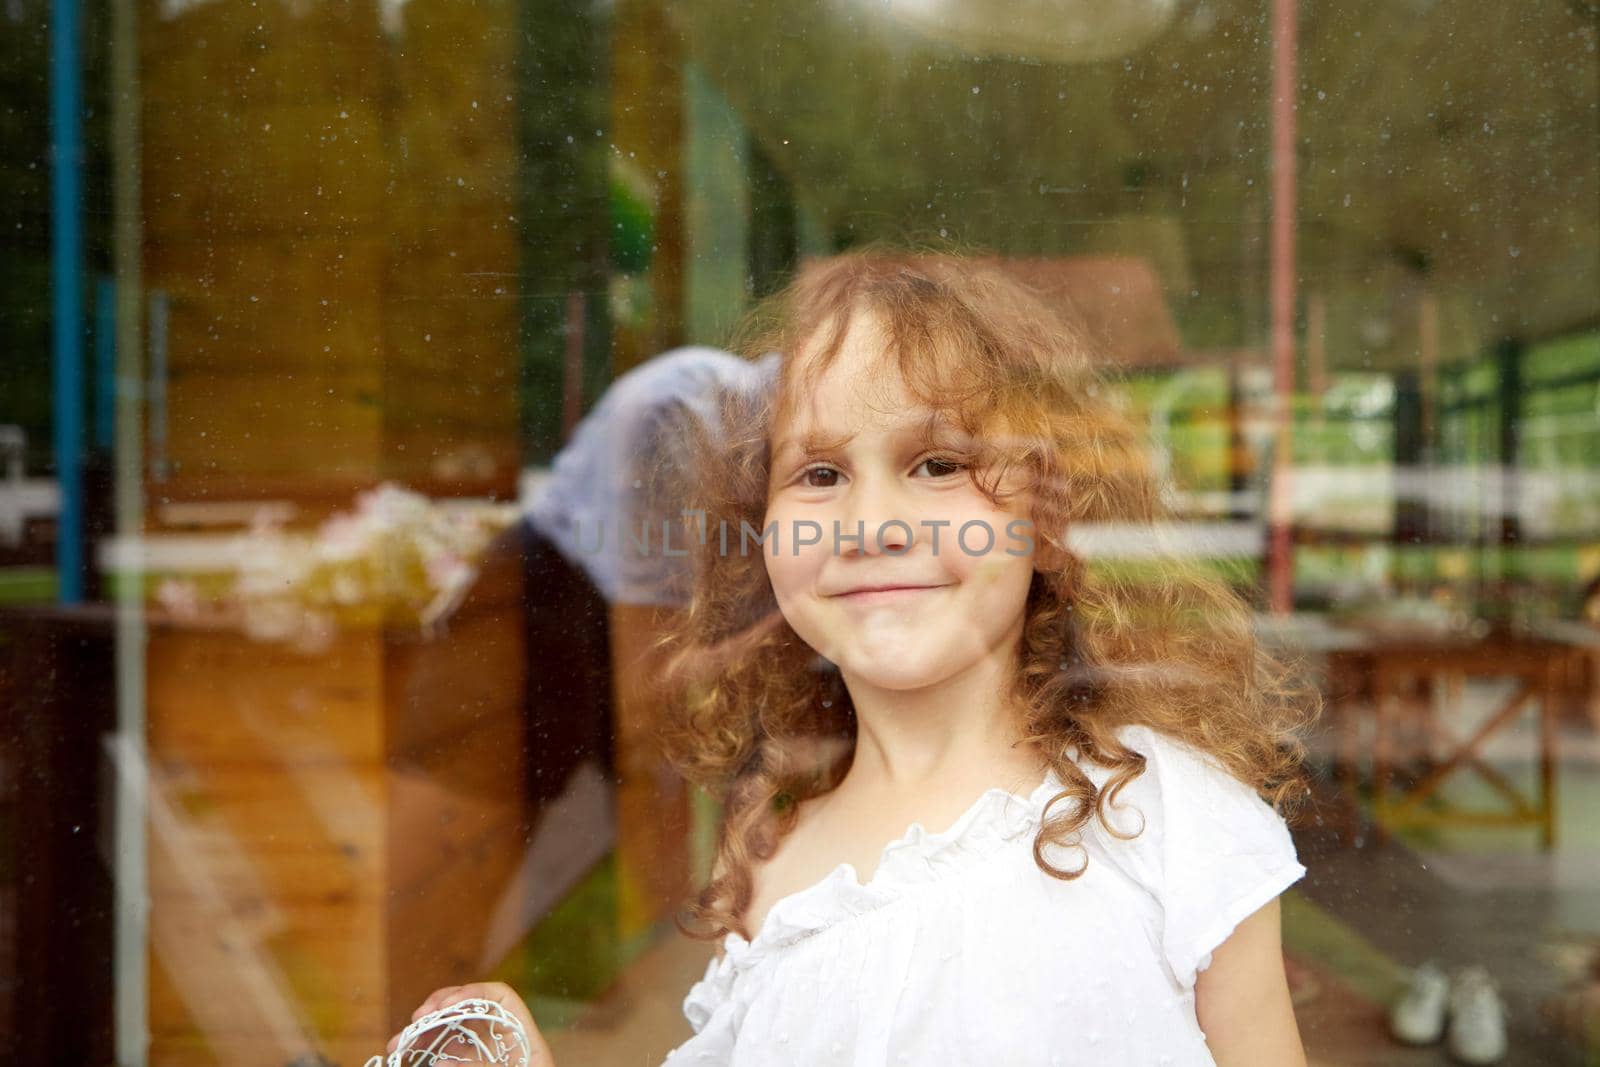 Adorable little girl behind window transparent glass by Demkat